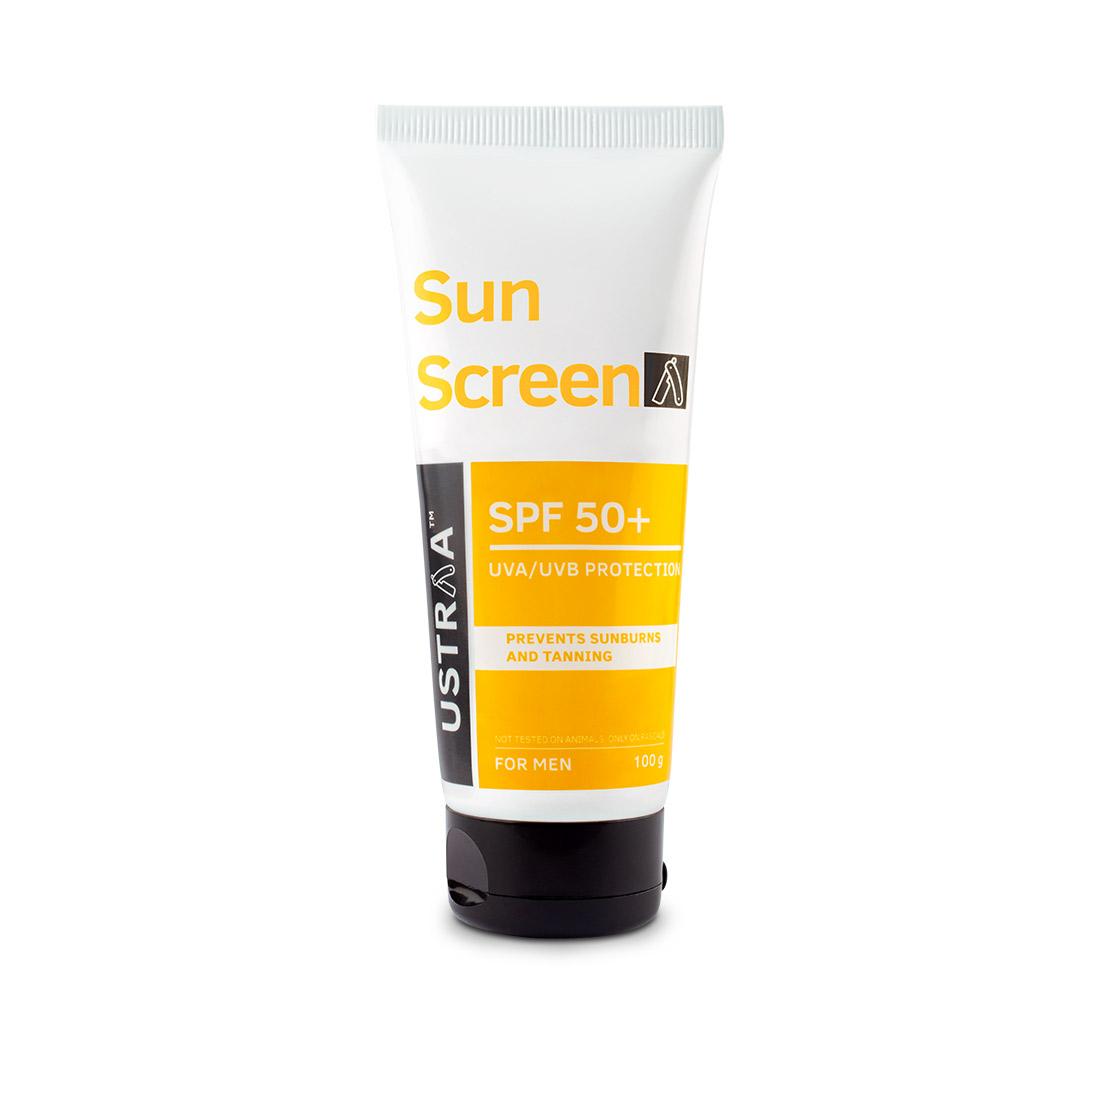 Ustraa Sunscreen for men SPF 50+ - Blocks upto 97% of UVB Rays - Paraben and Sulphate free - 100g